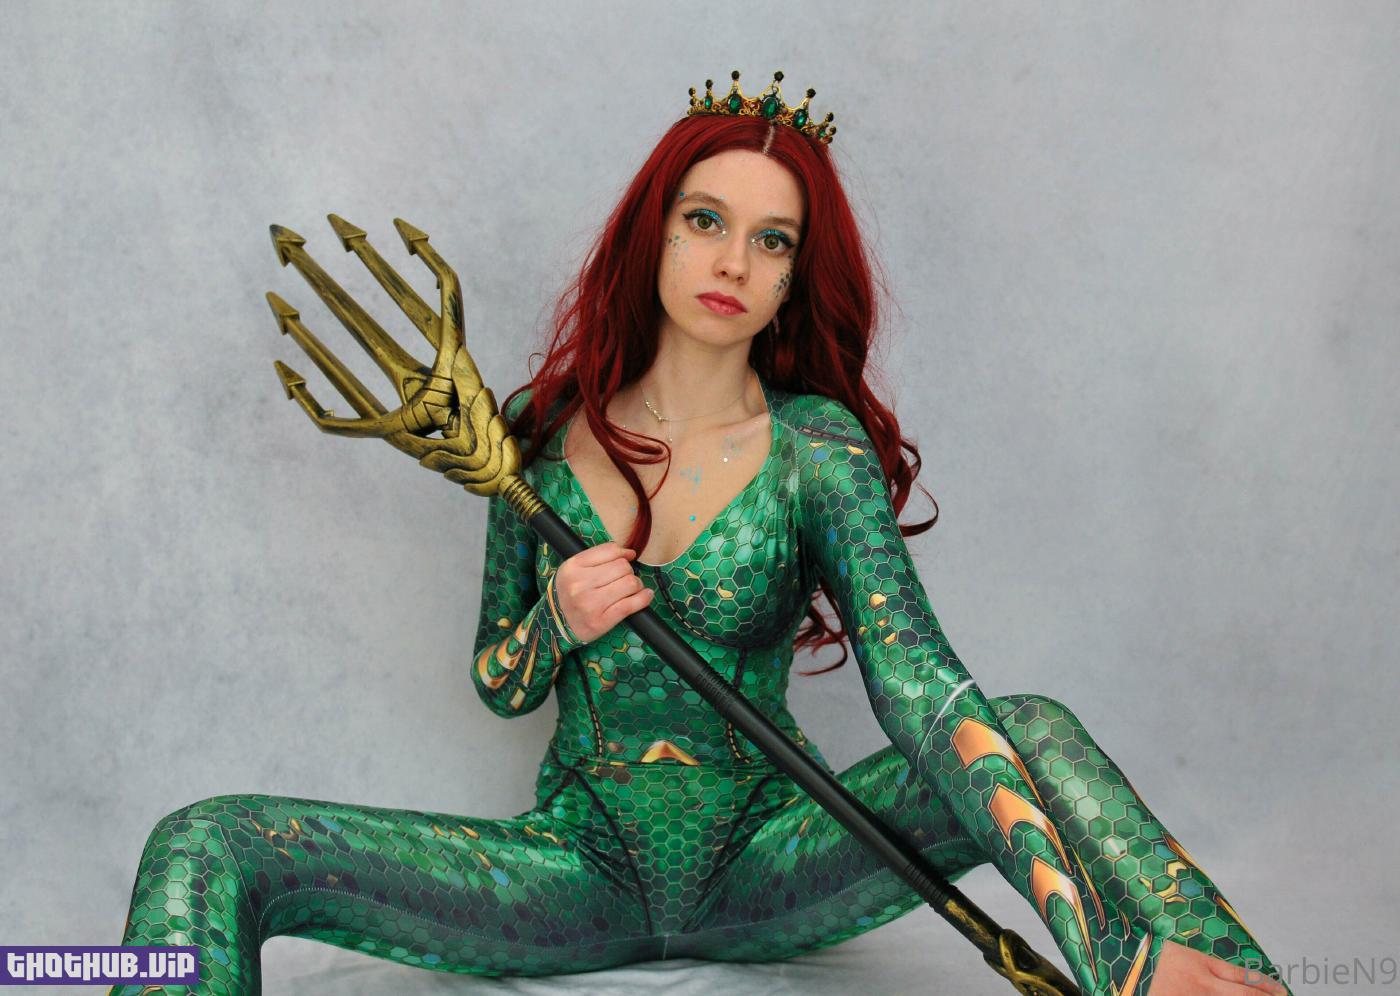 1663057412 495 BarbieN9 Aquaman Queen Mera Cosplay Onlyfans Set Leaked